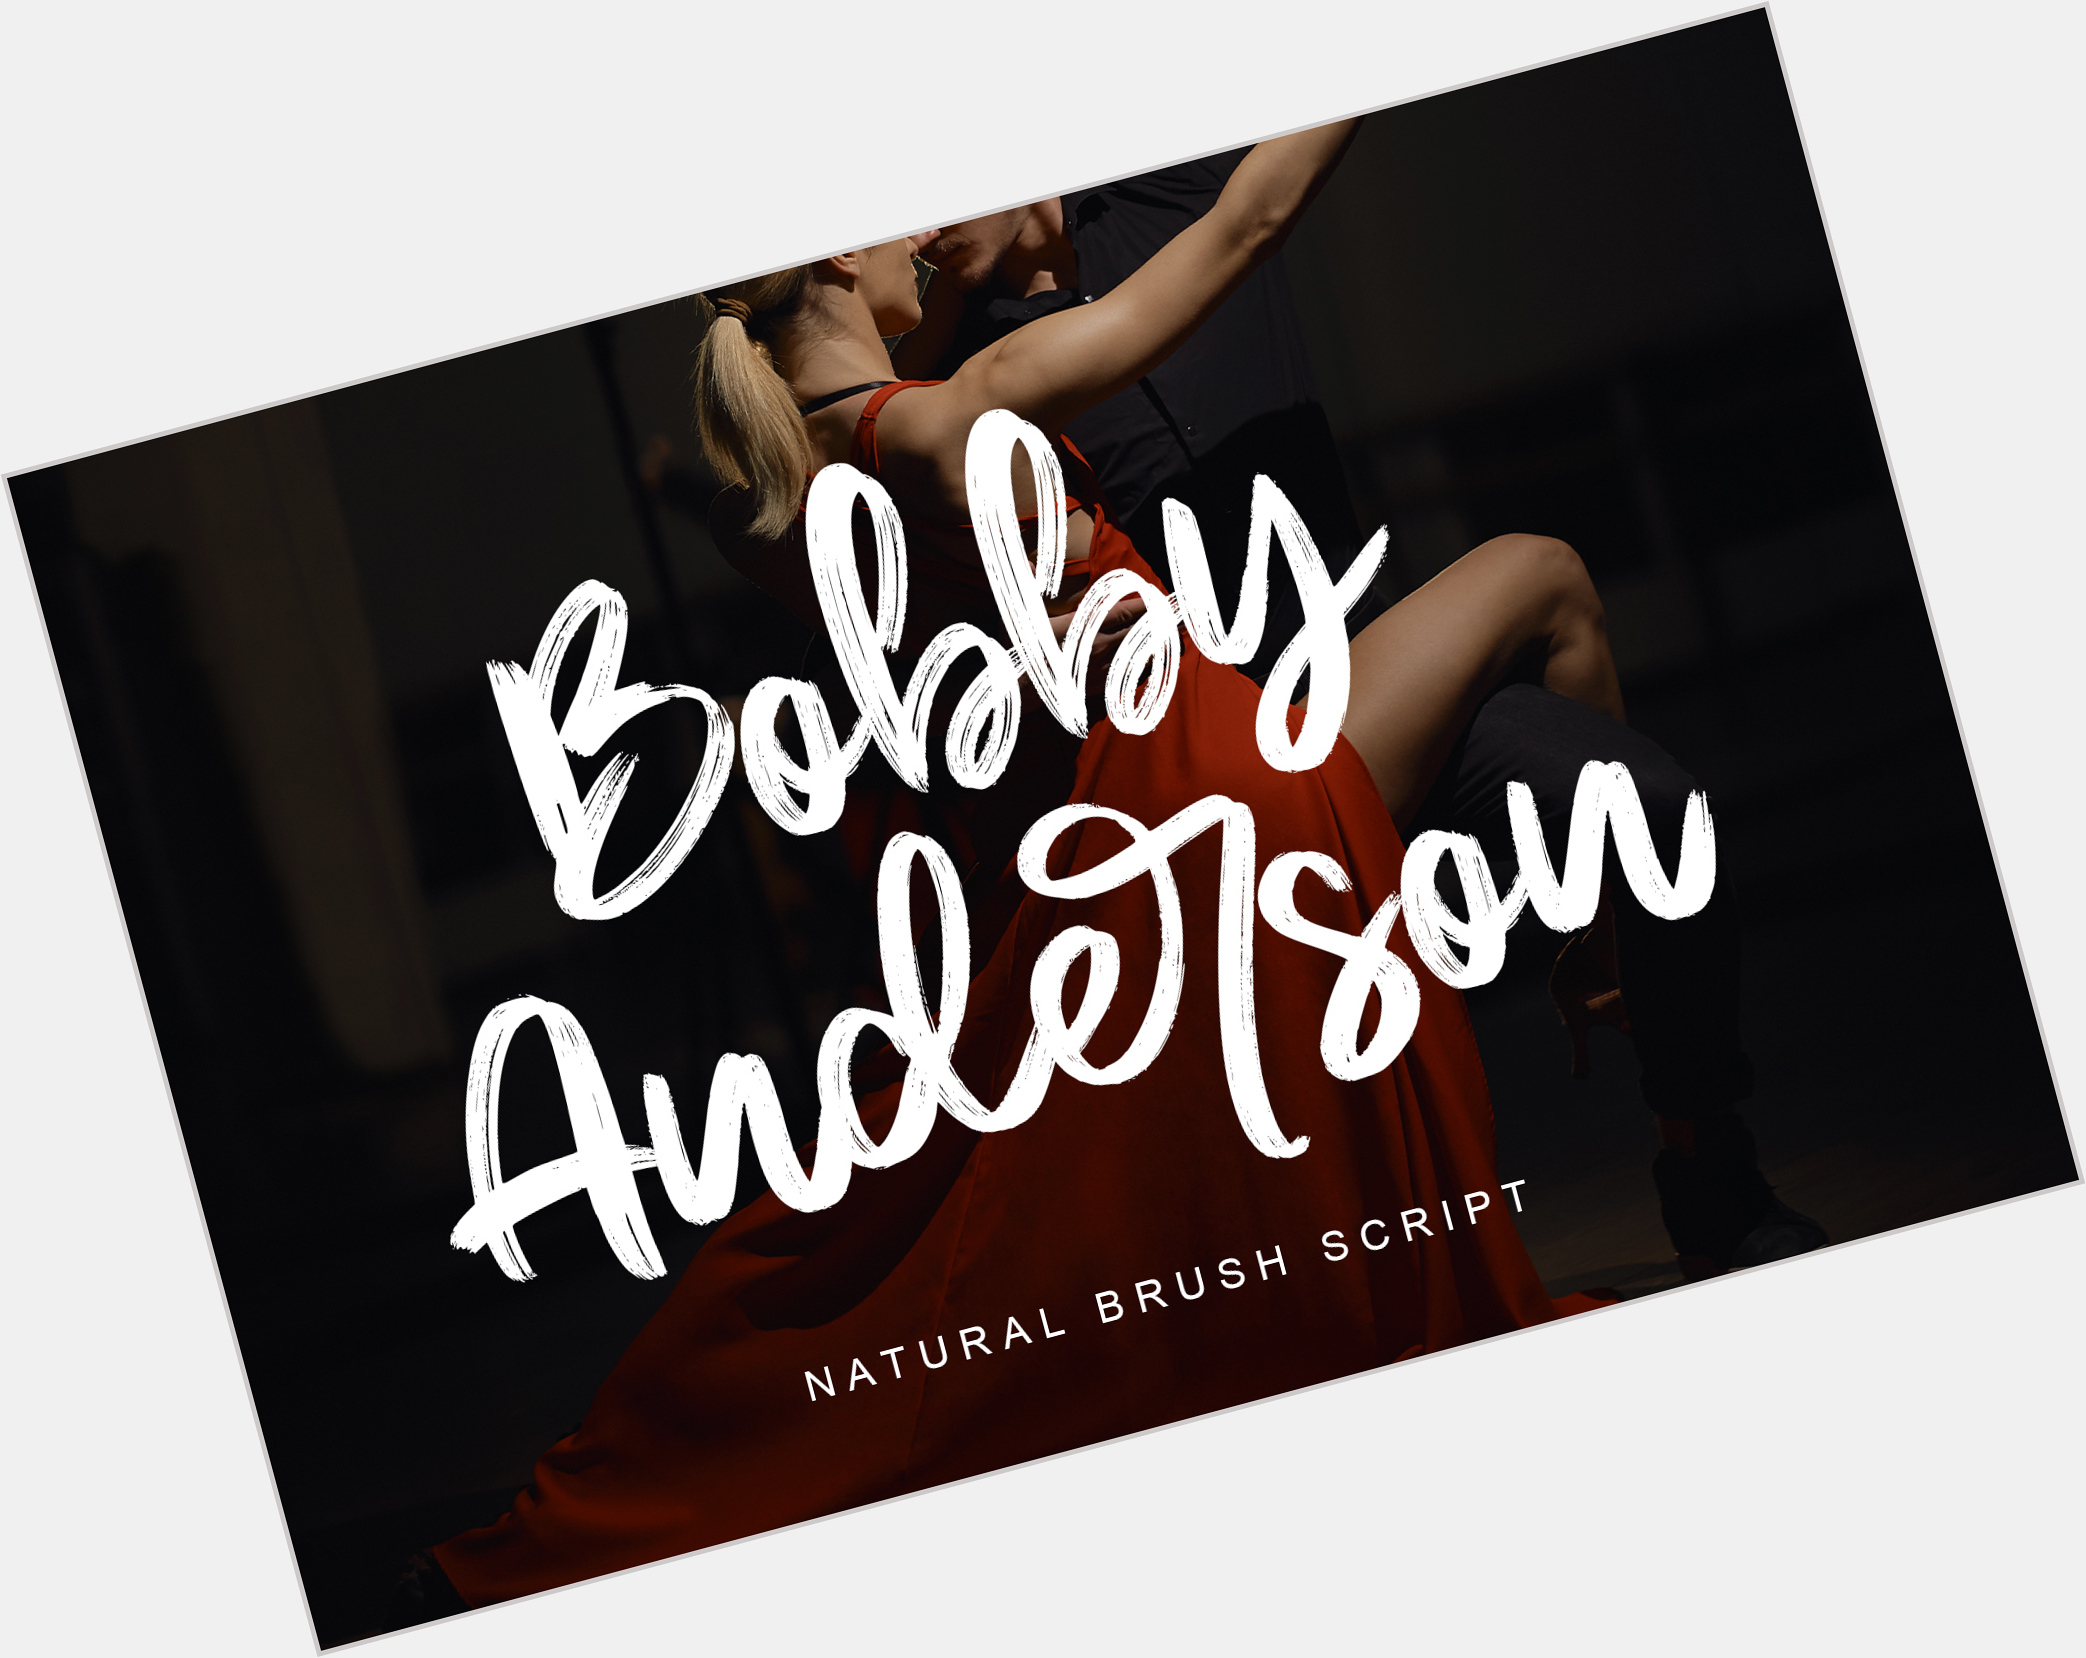 Bobby Anderson shirtless bikini